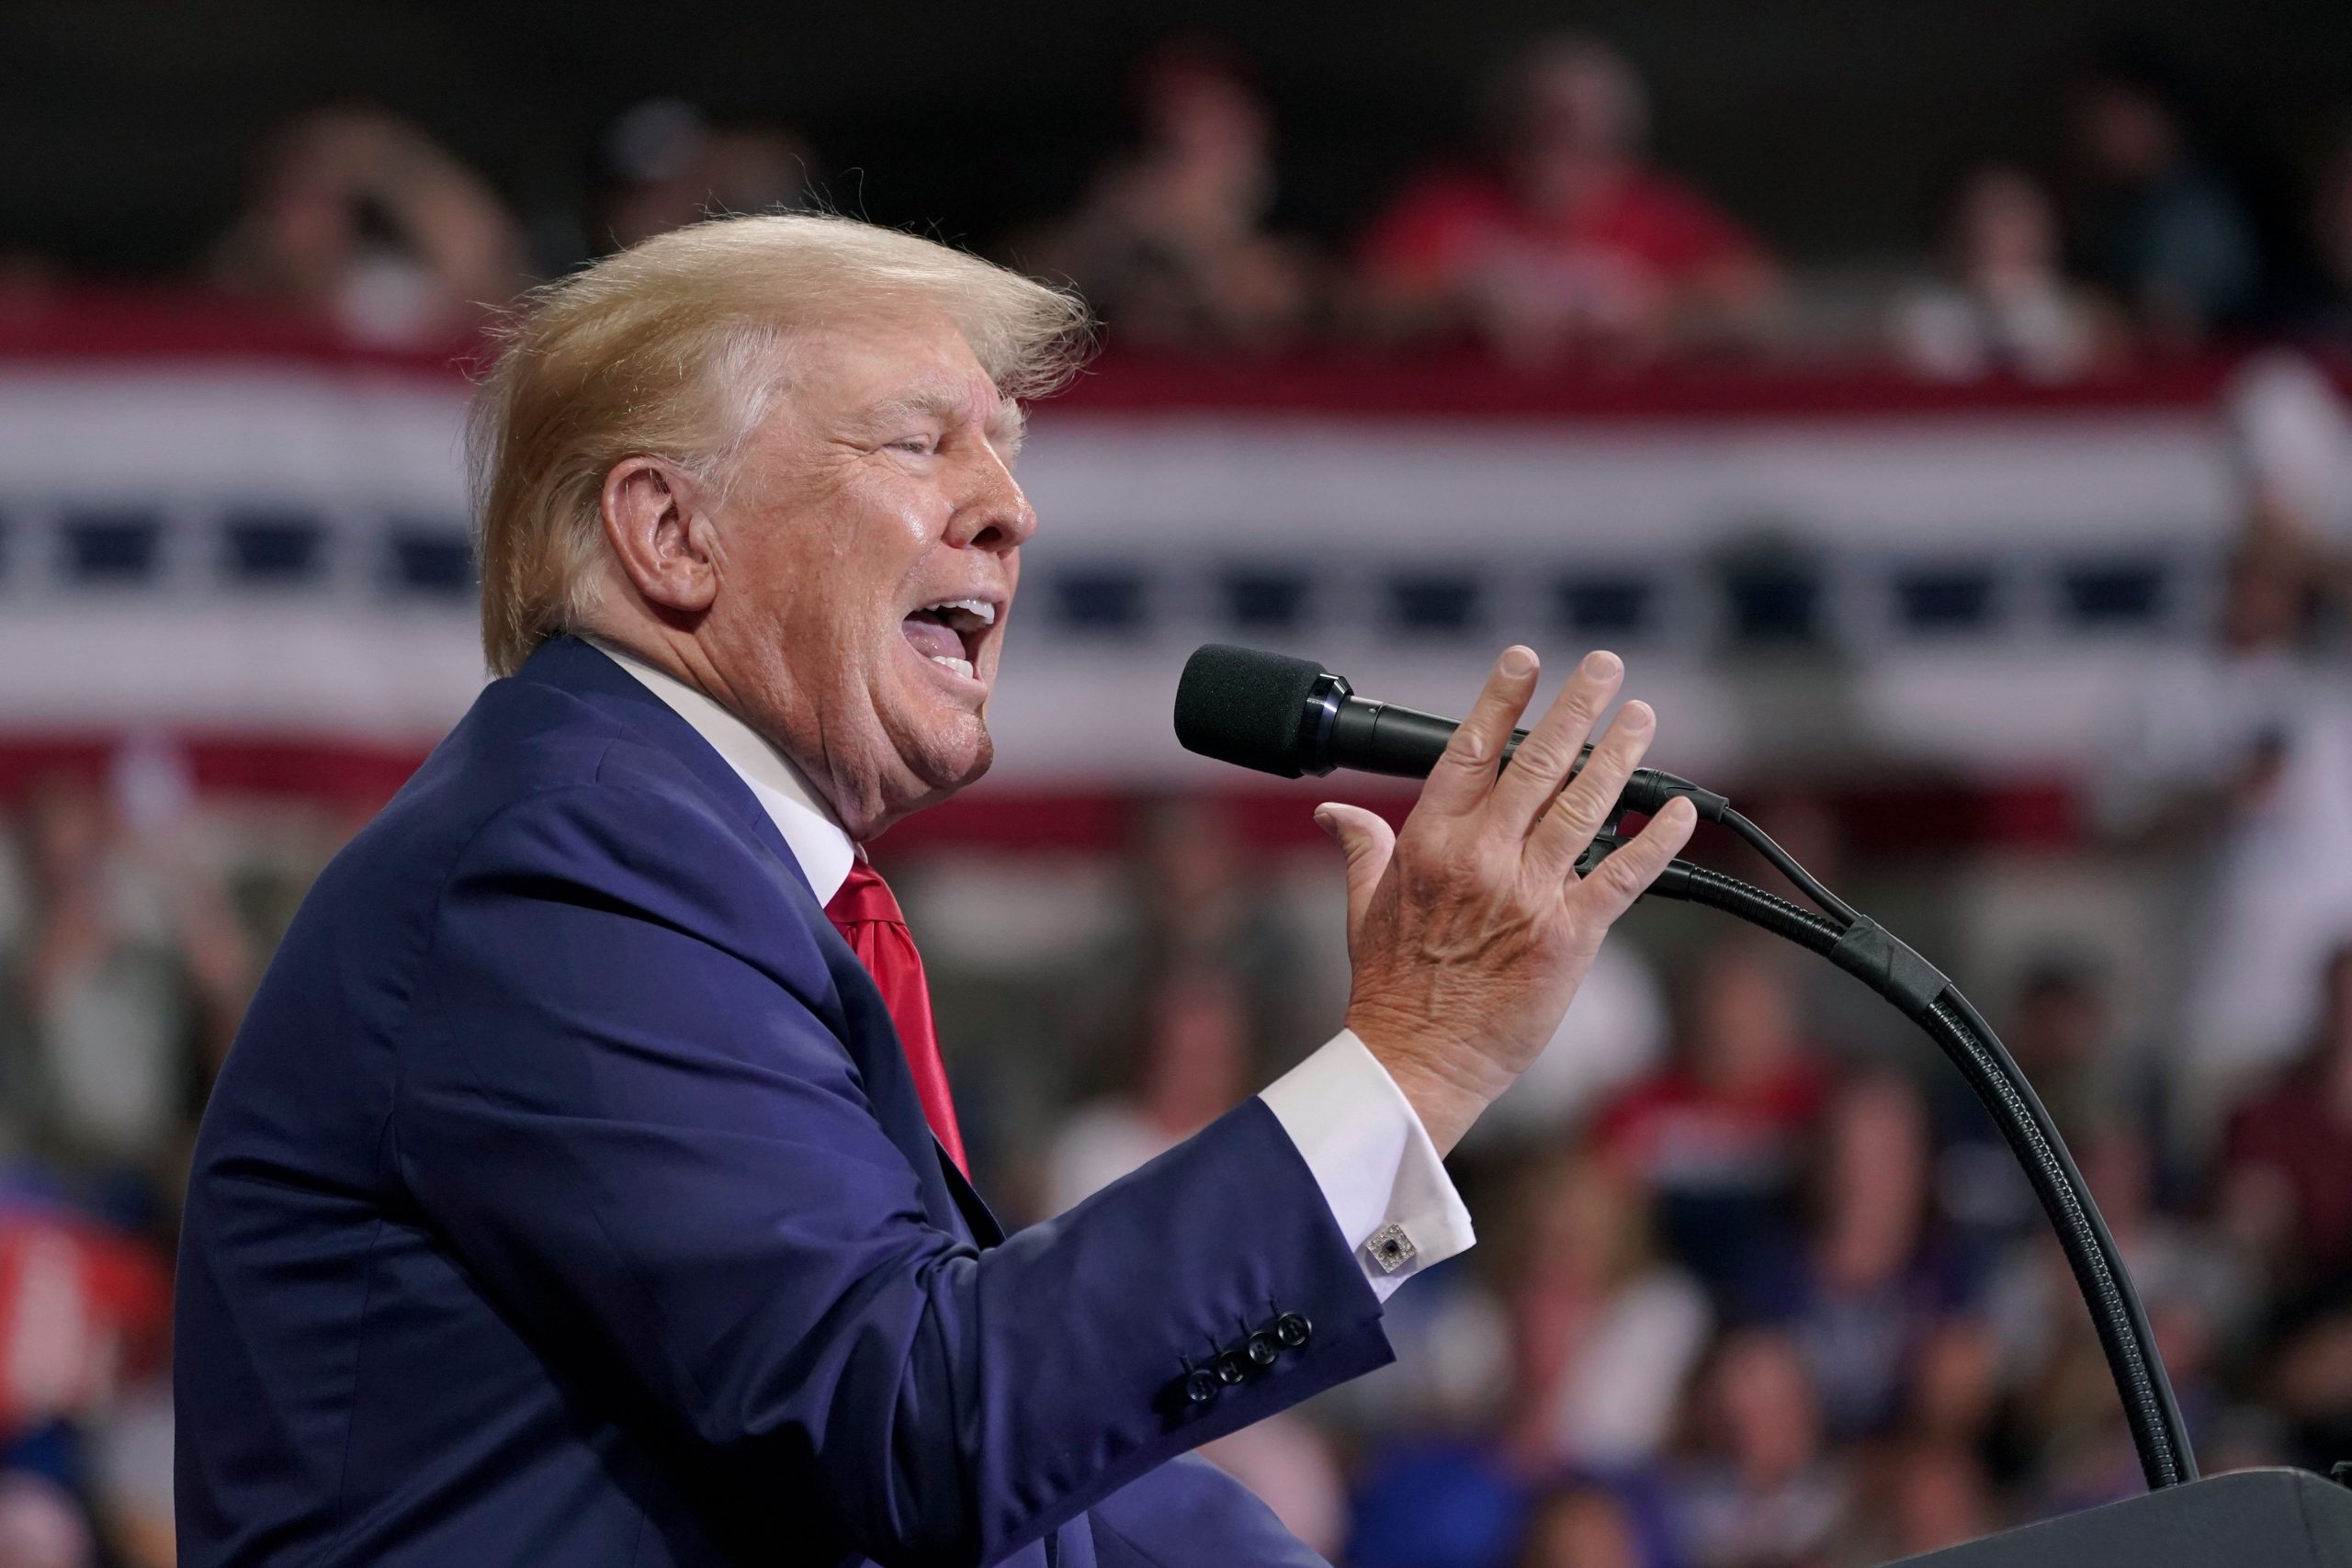 Donald Trump Pennsylvania speech: 5 key takeaways